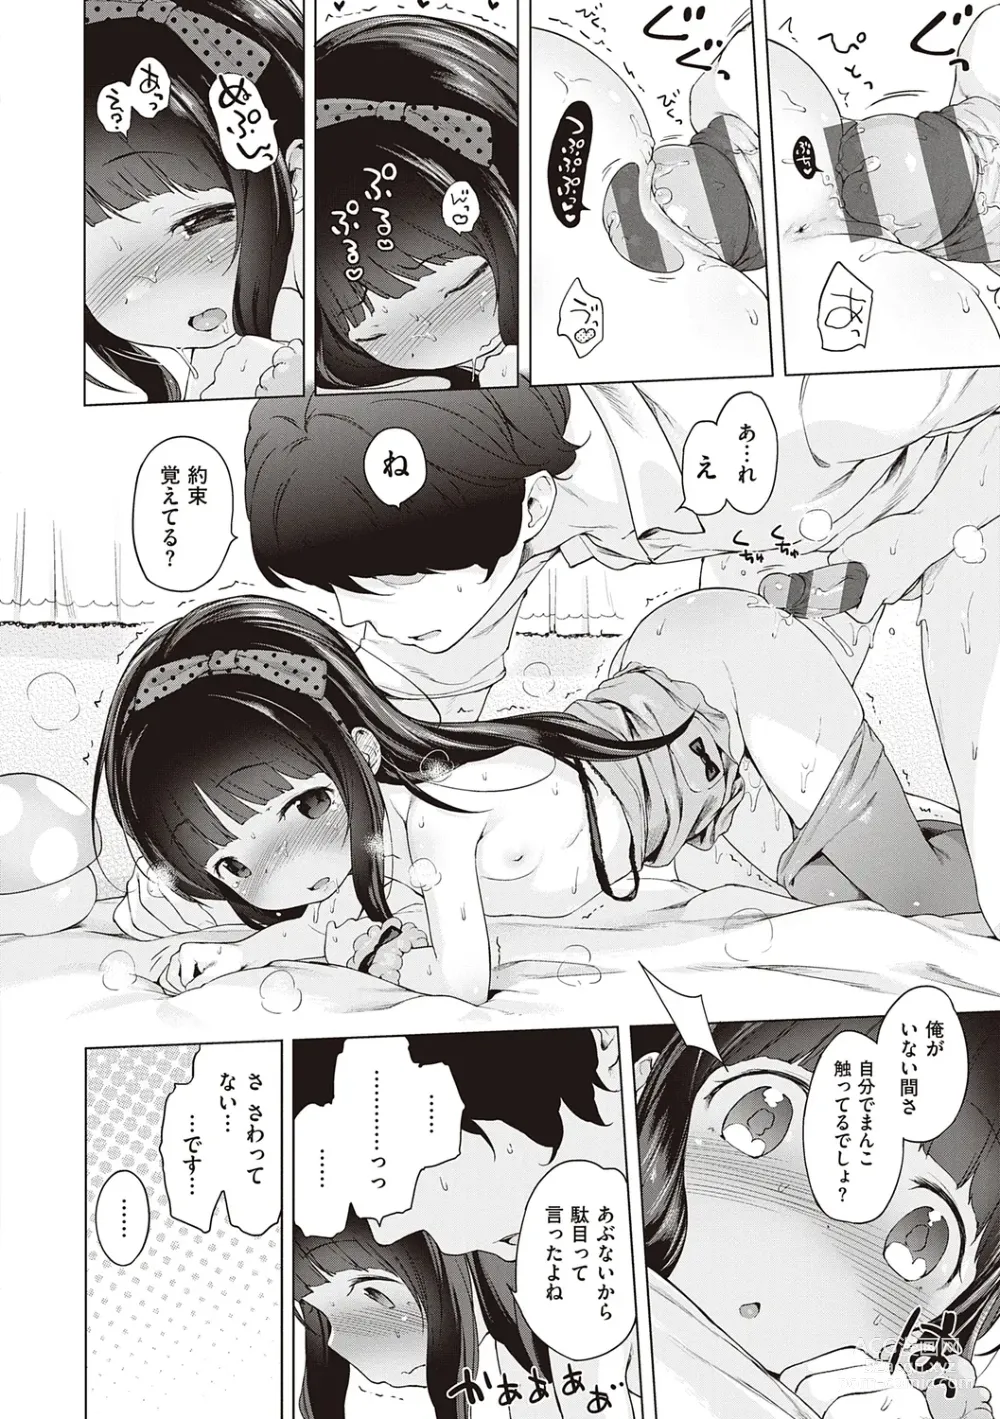 Page 34 of manga Motto! Hatsukoi Ribbon.